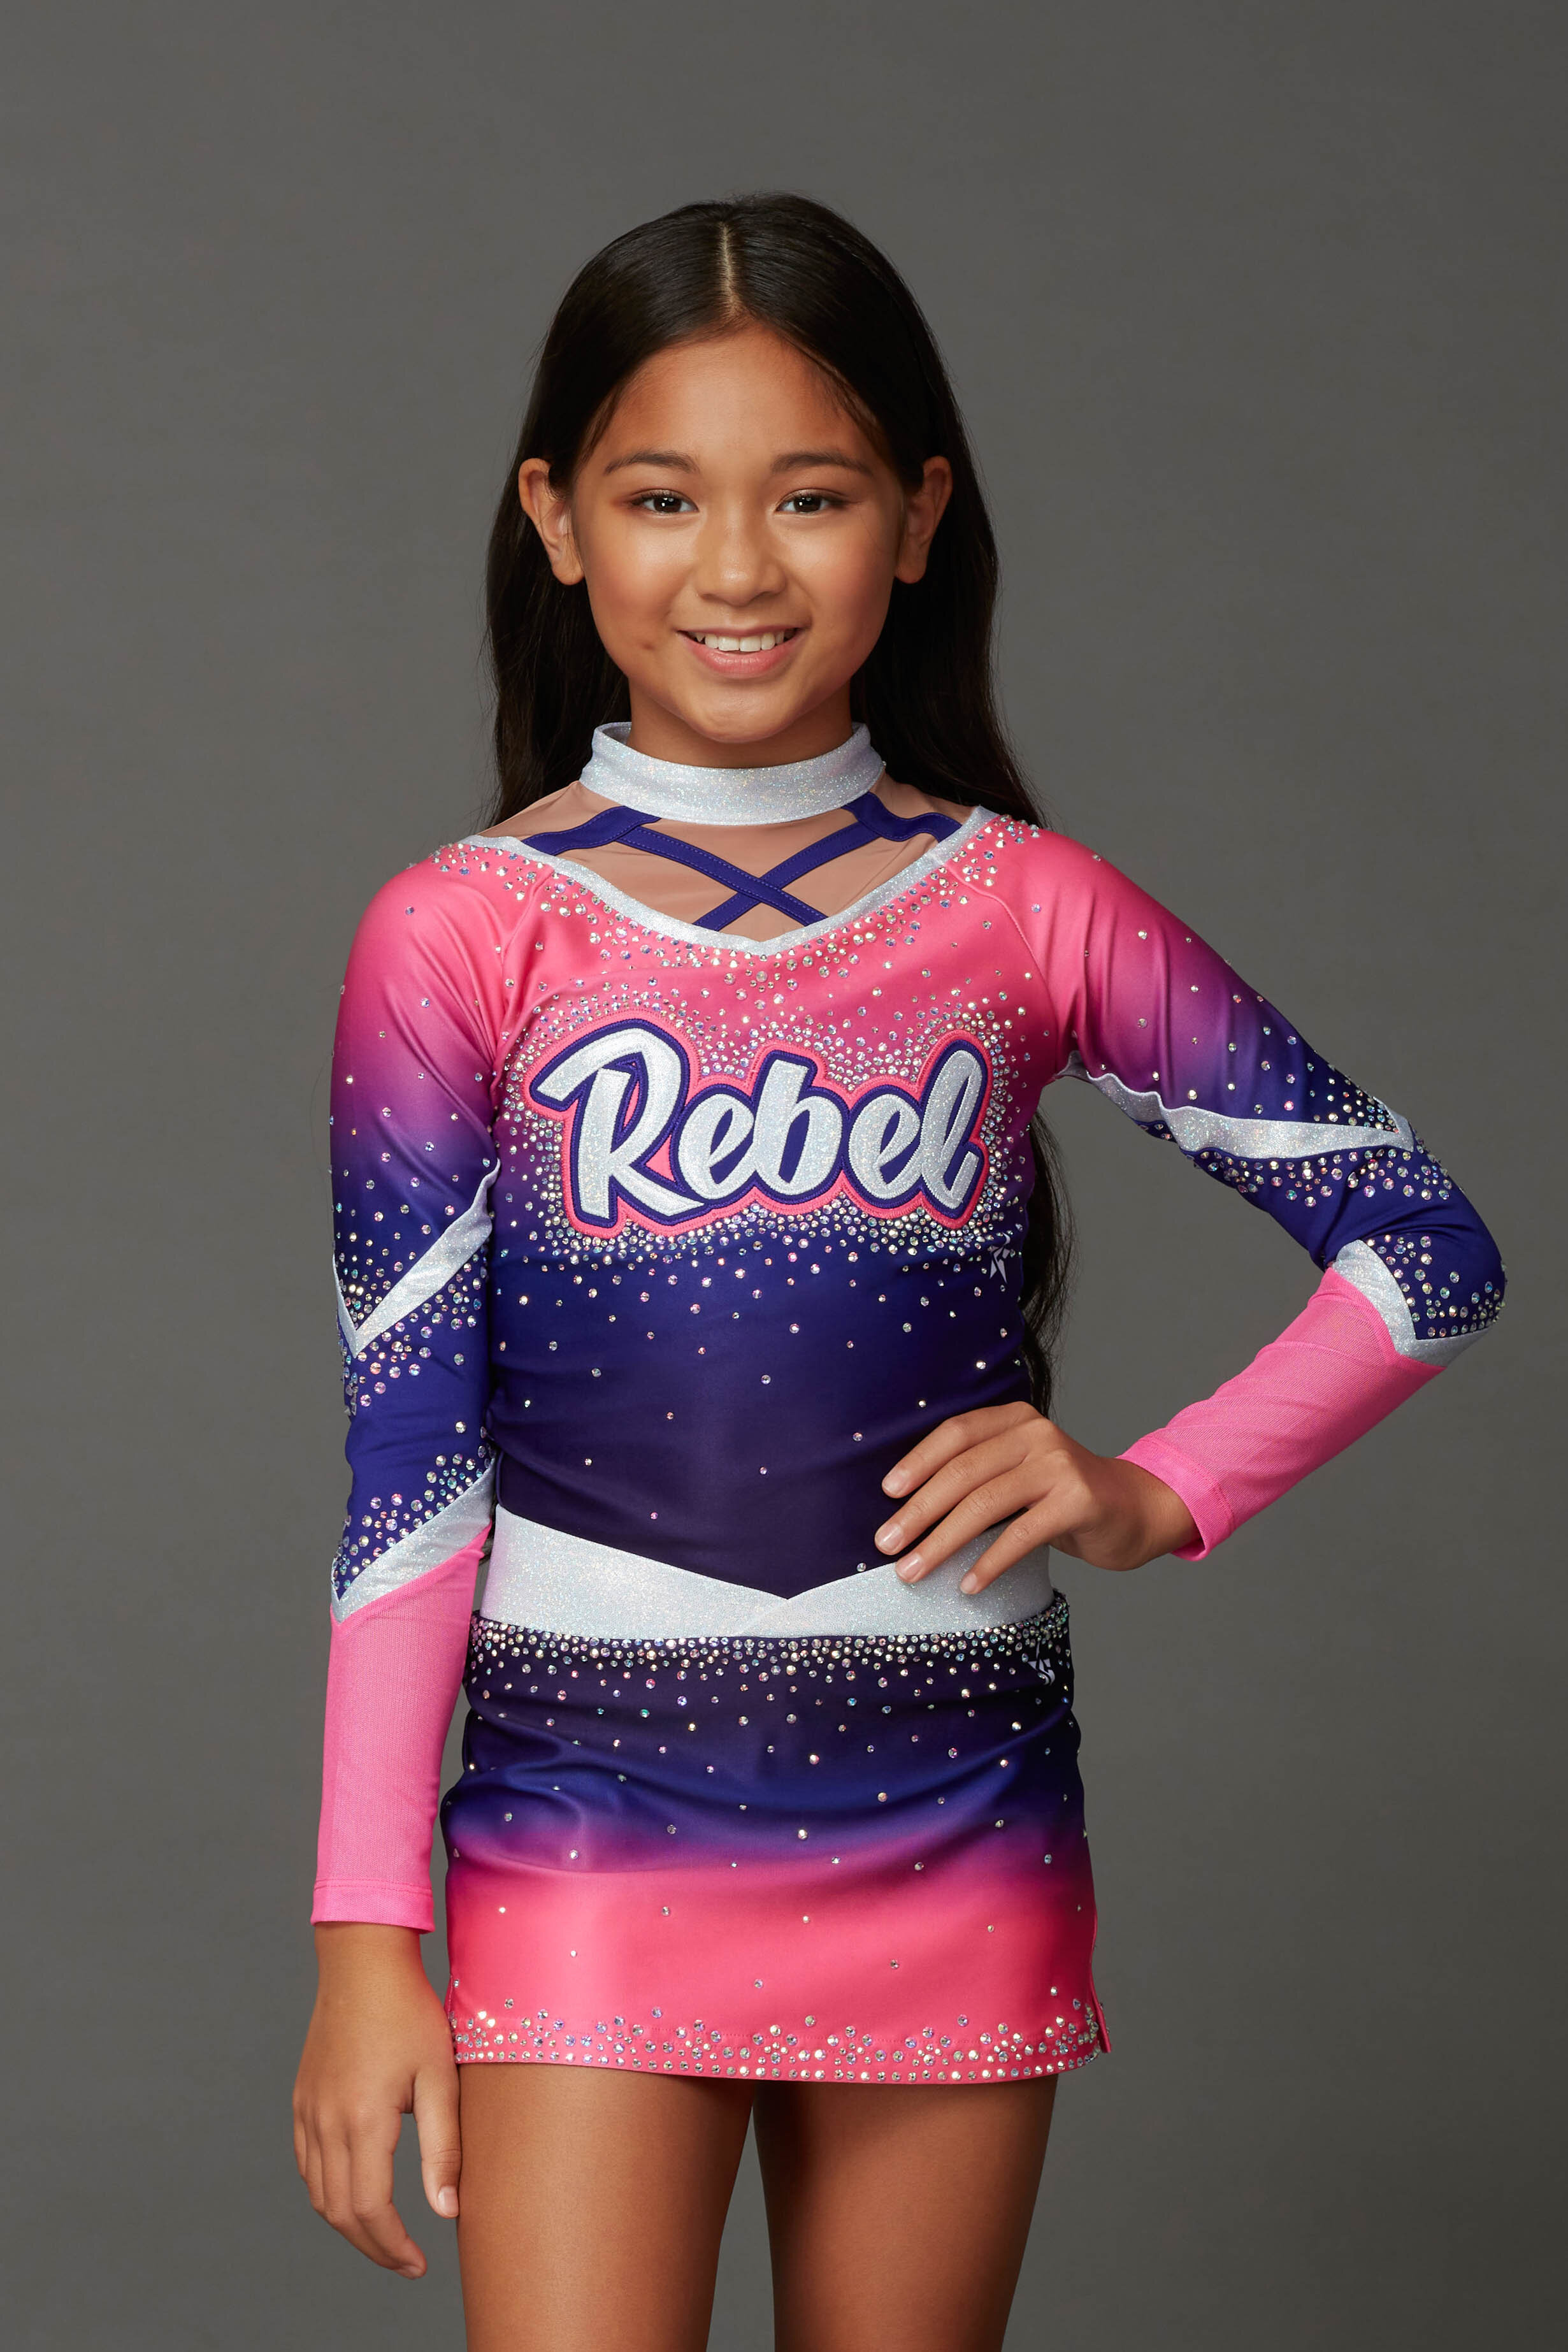 Platinum Cheer Debuts New Rebel Uniforms for the 2021 Season!